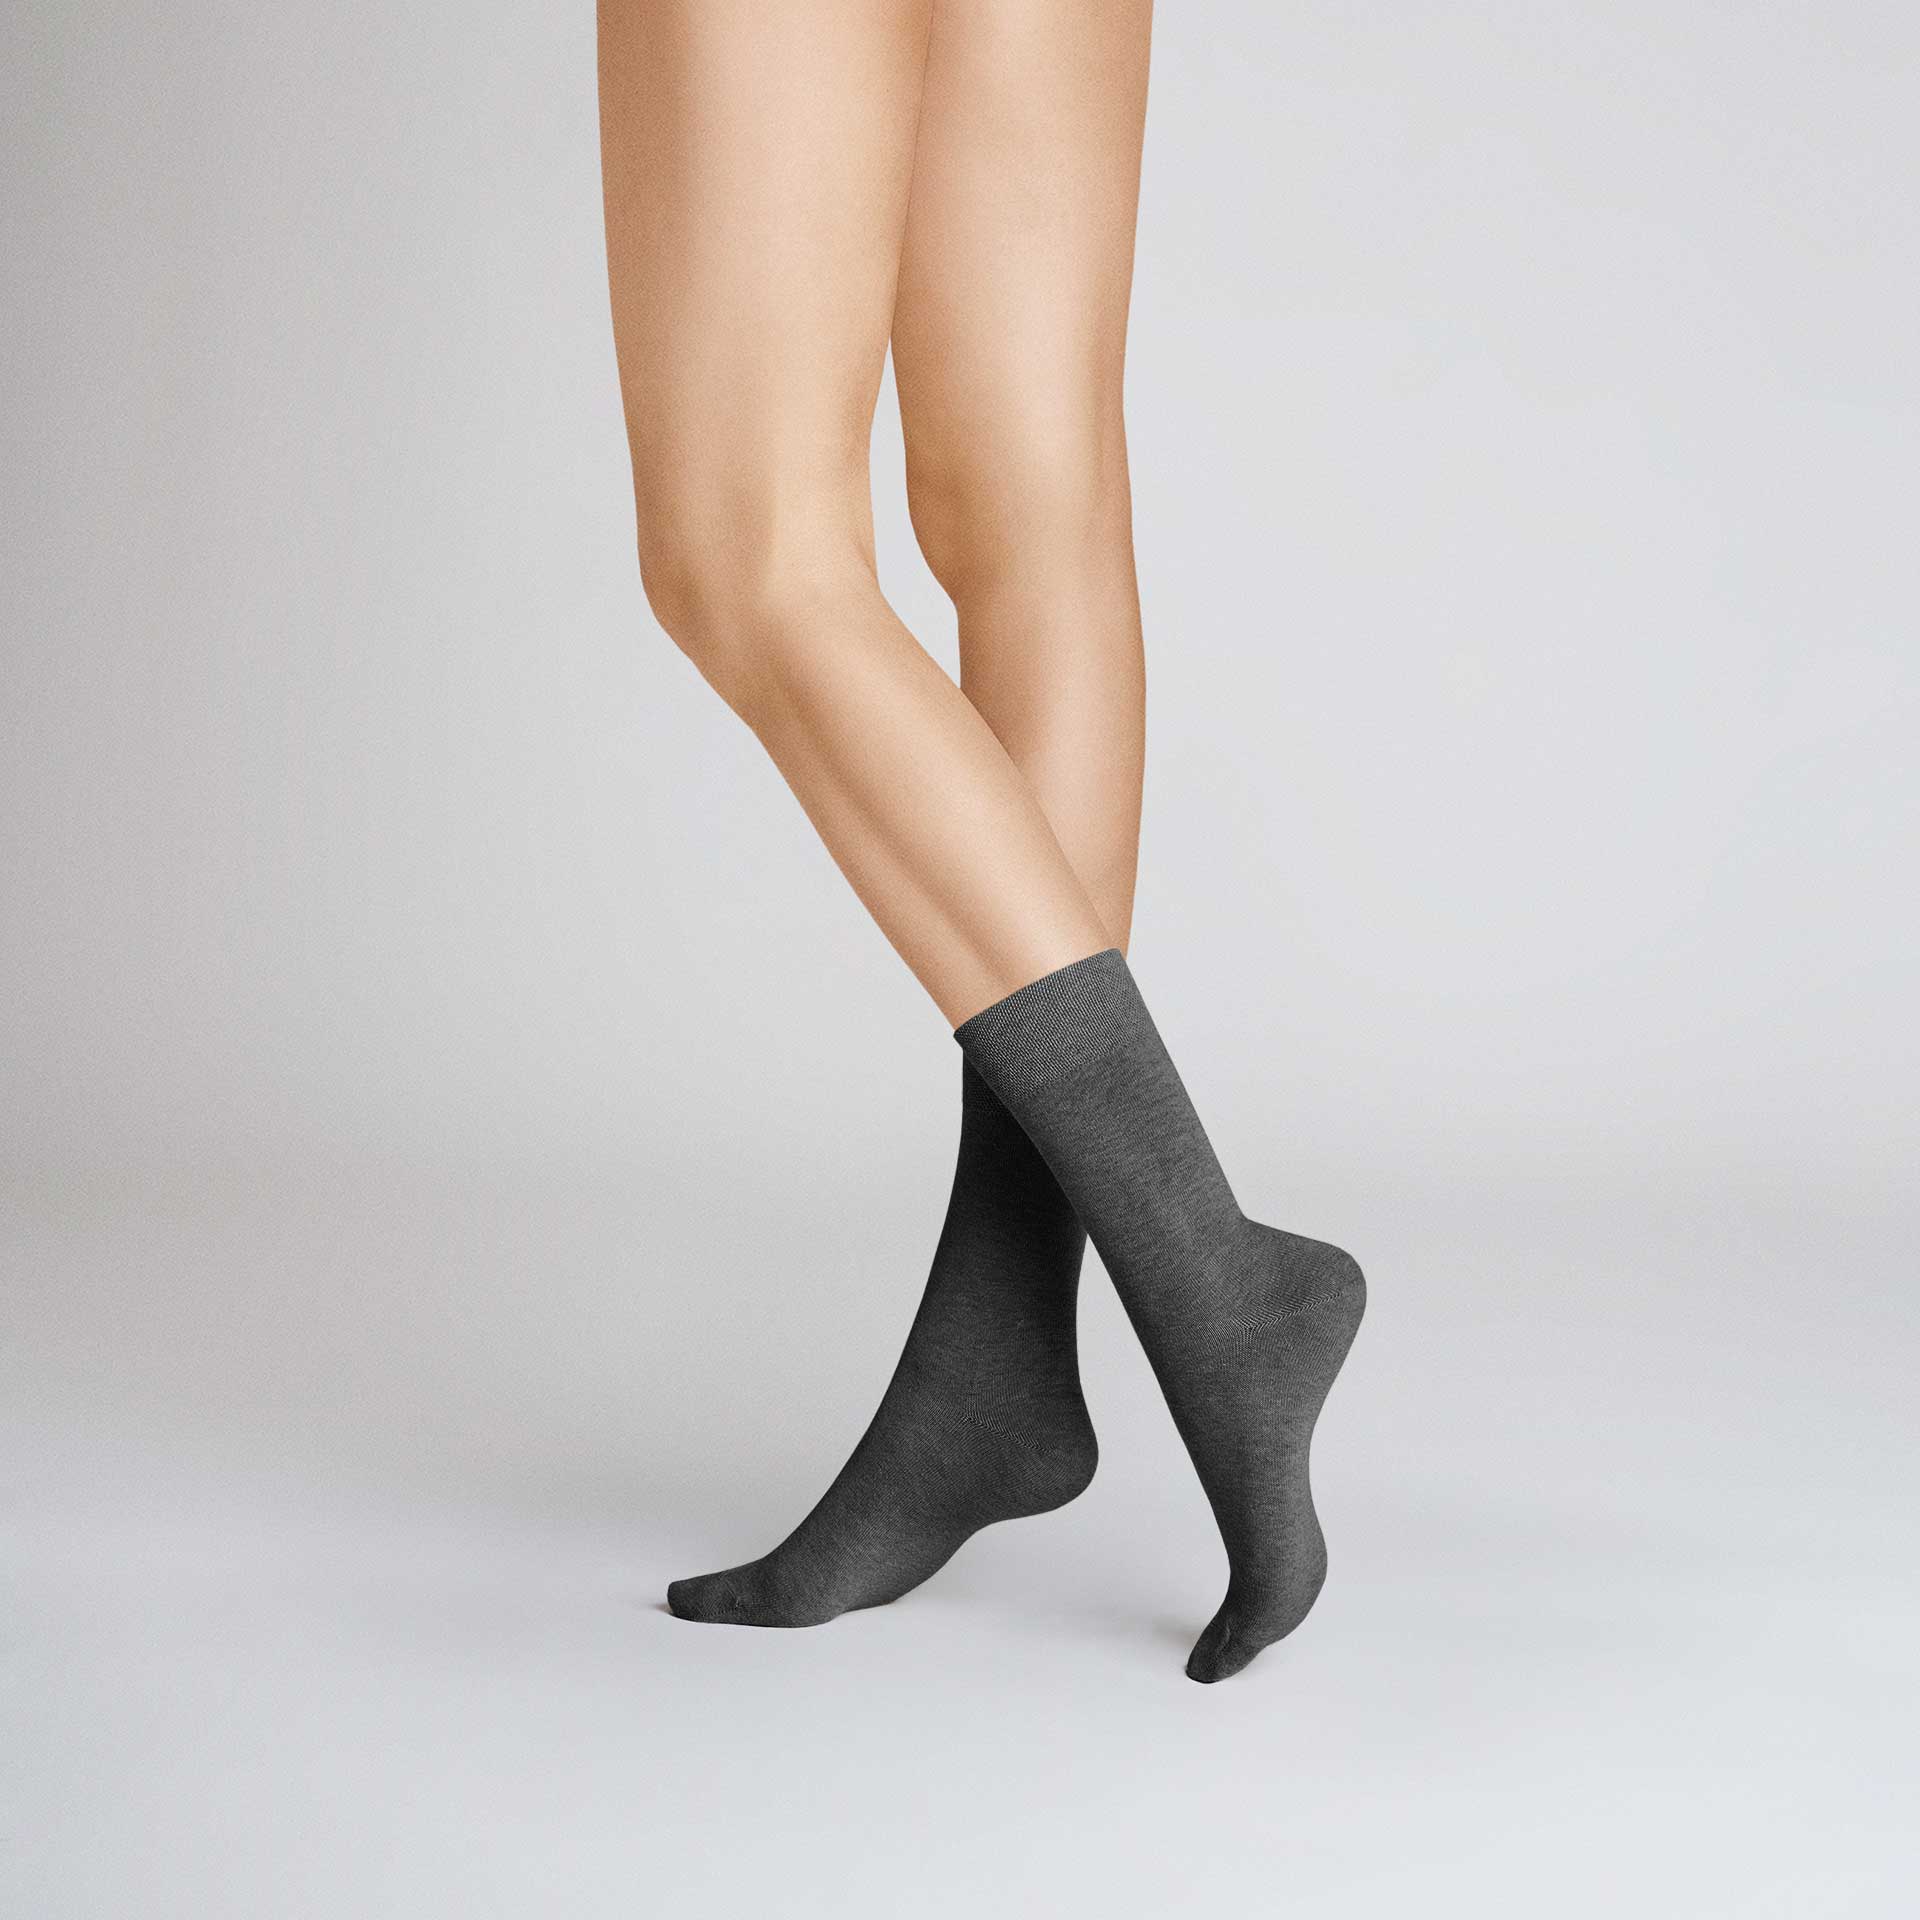 HUDSON Damen RELAX COTTON     -  35/38 - Socken aus 97% Baumwolle - Grau-mel. (Grau)